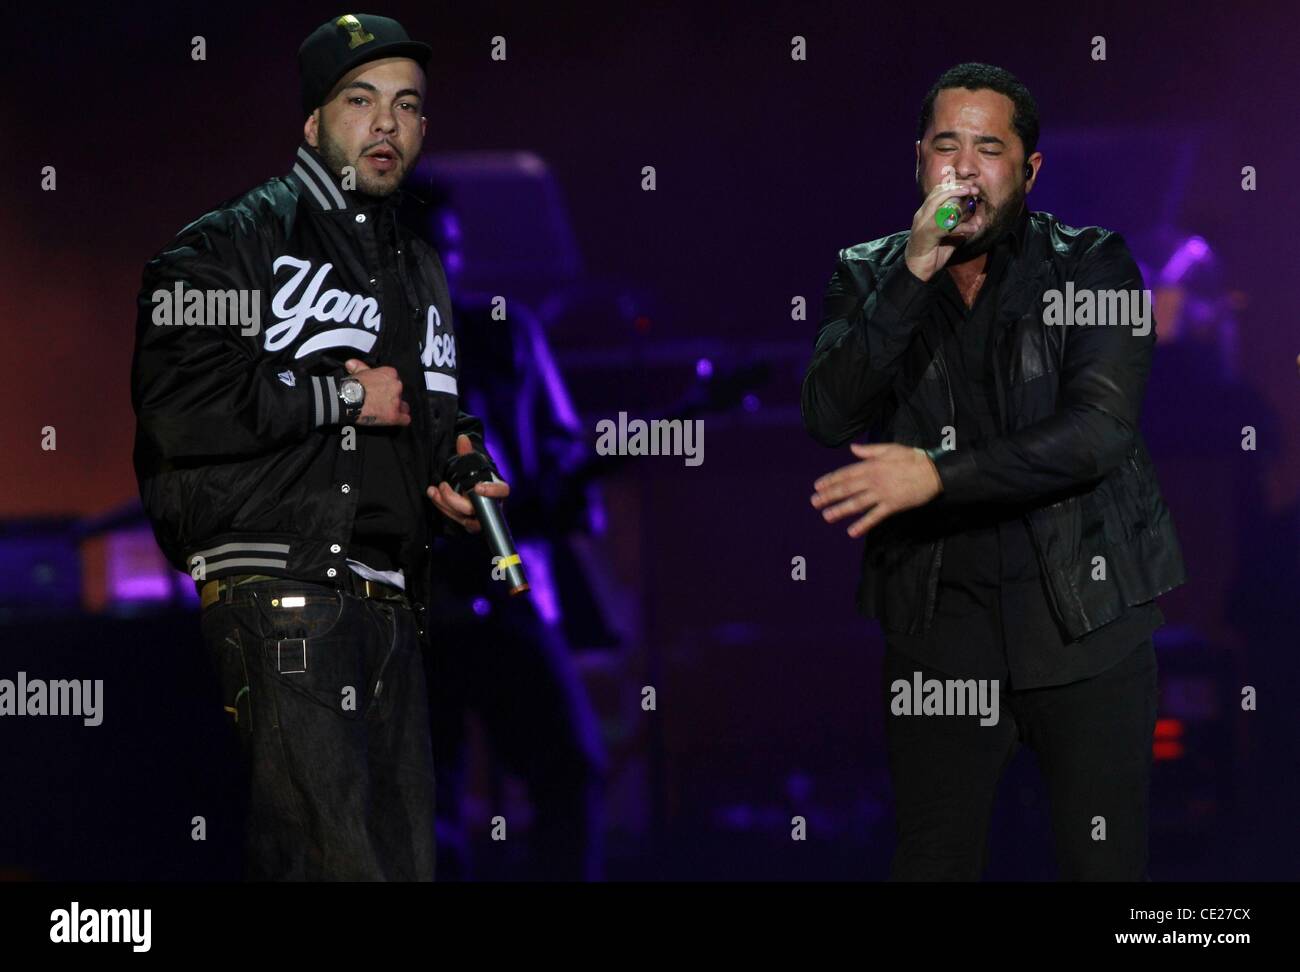 Adel Tawil e Azad performing live al "Wir battuto mehr" evento in arena O2 World. Amburgo, Germania - 13.01.11 Foto Stock